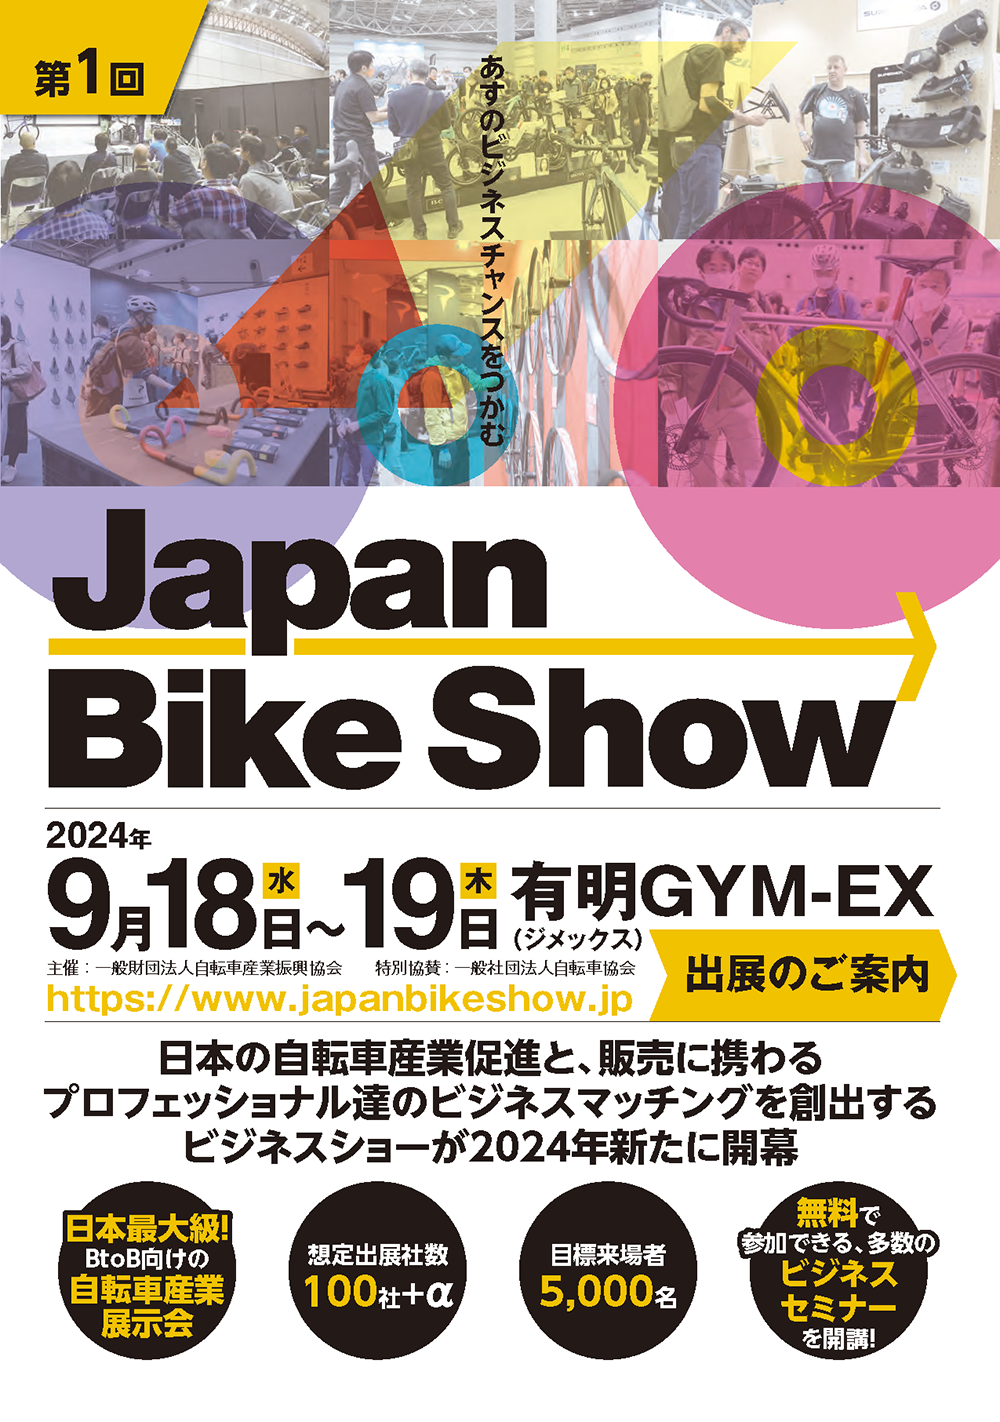 Japan Bike Show